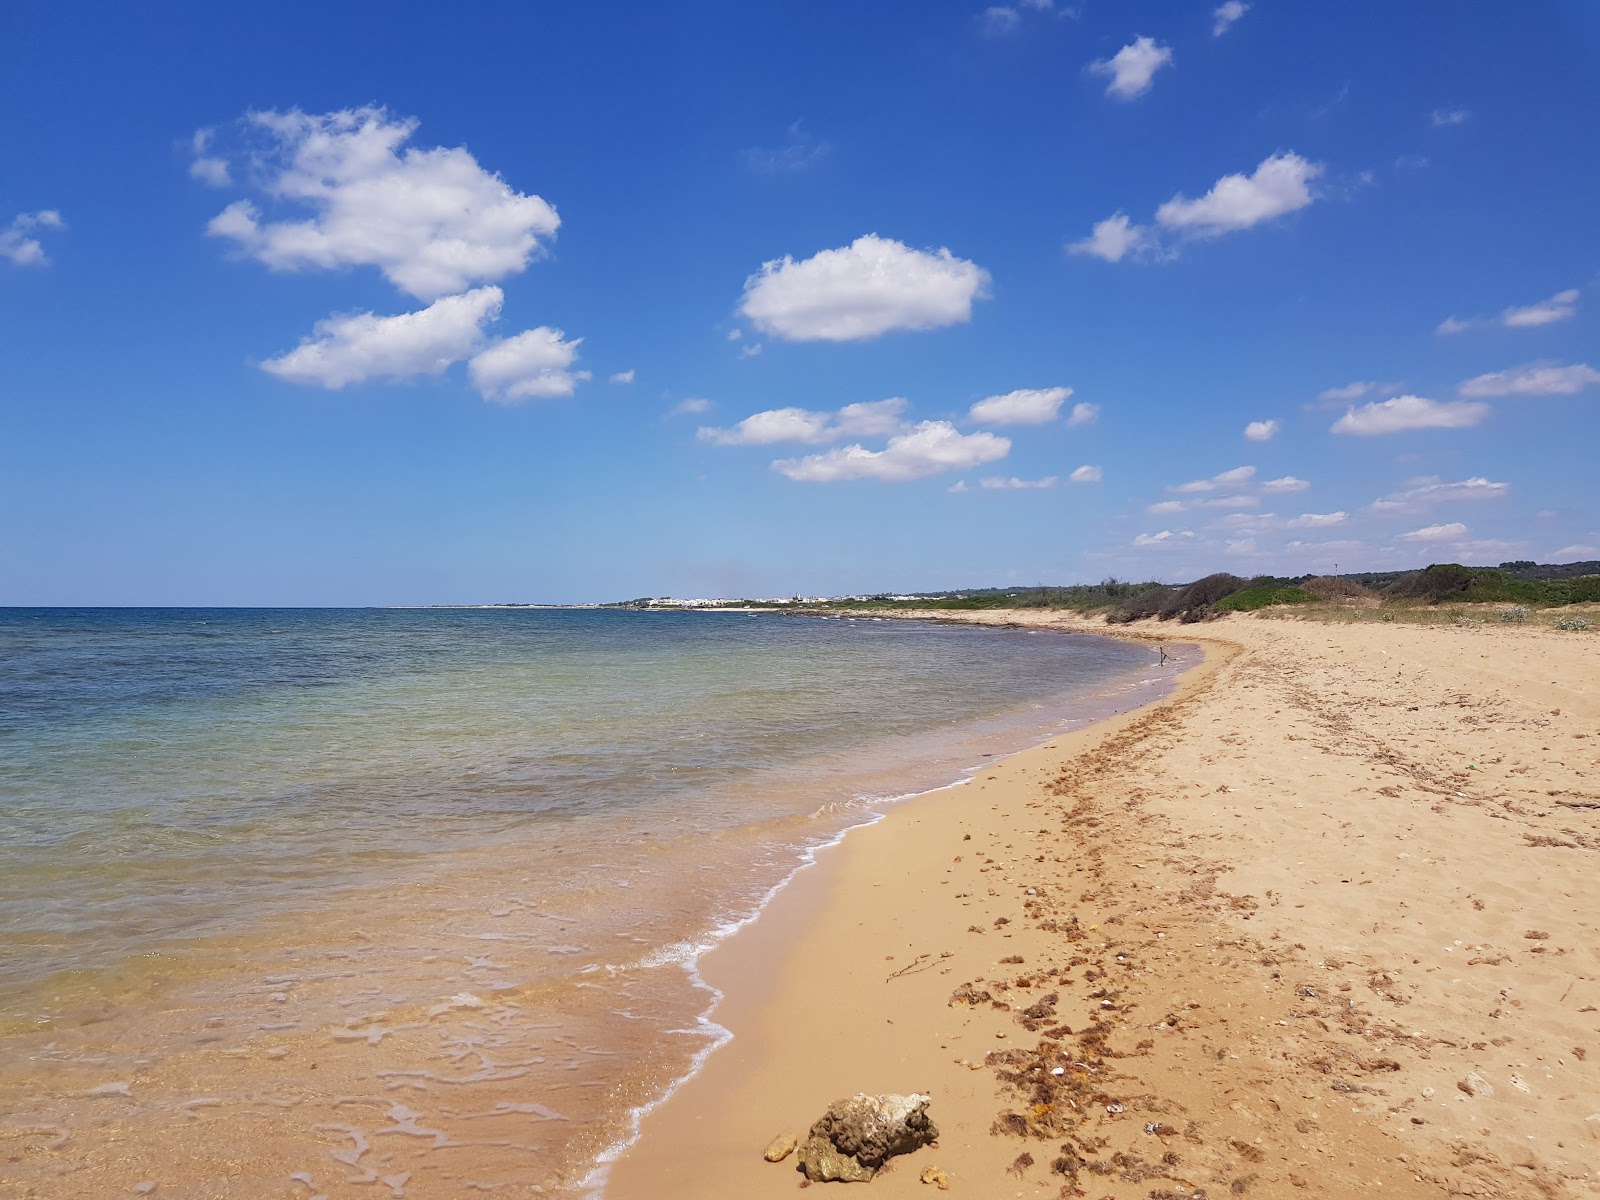 Fotografie cu Spiaggia dell'Isola della Fanciulla cu o suprafață de nisip strălucitor